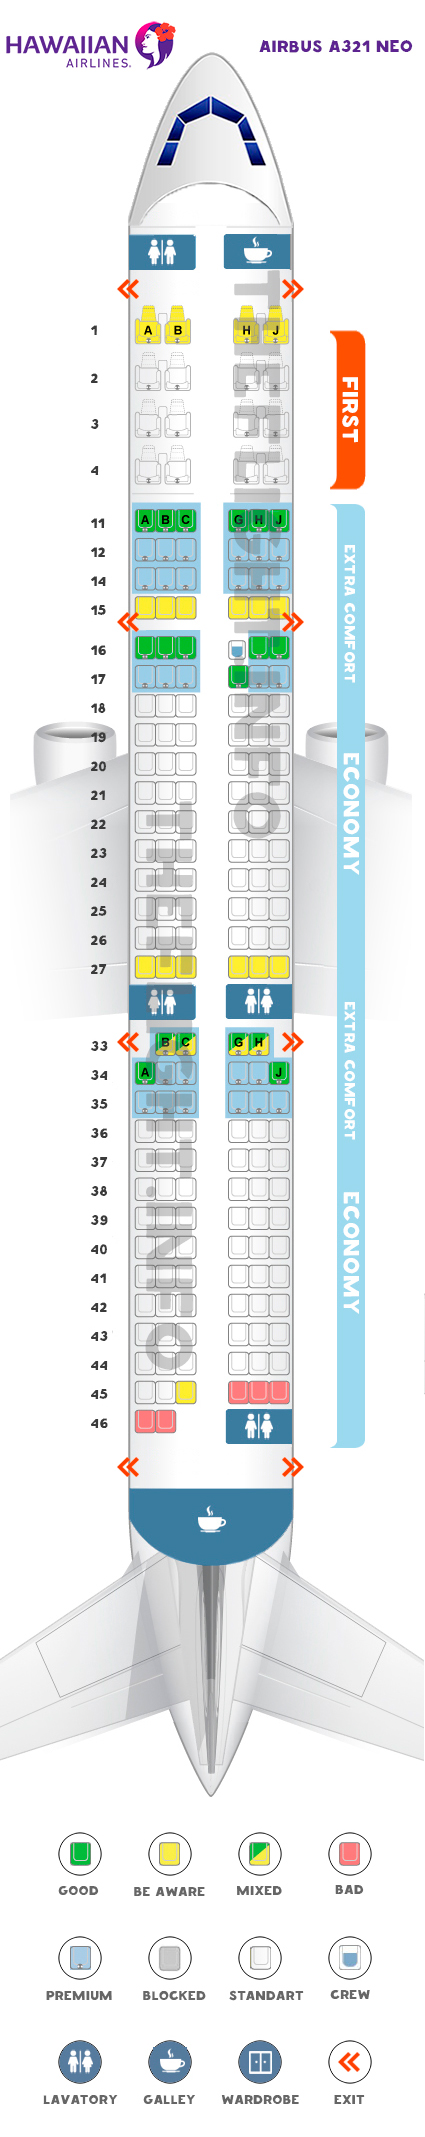 Hawaiian Airlines Flight 23 Seating Chart